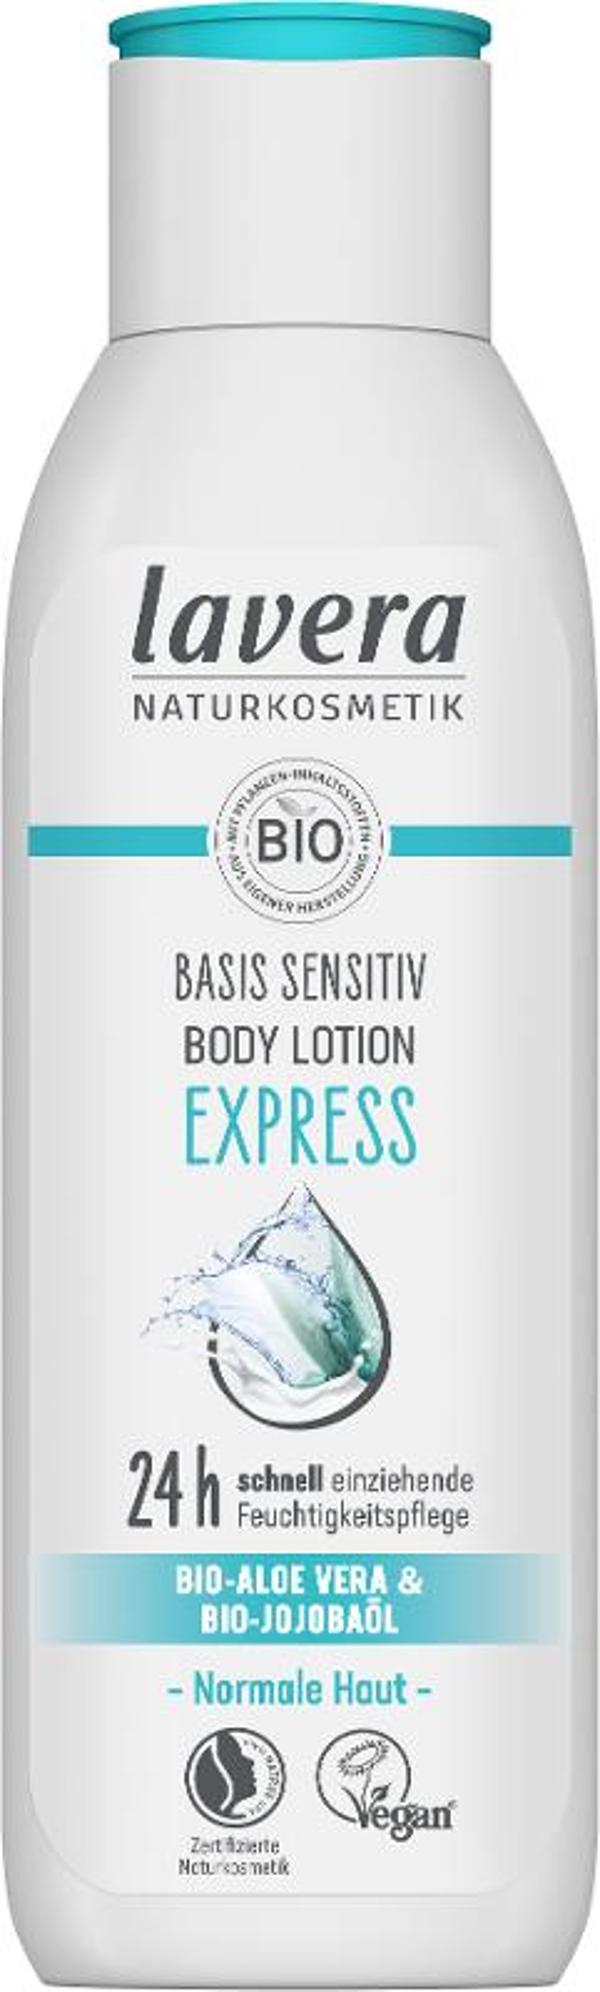 Produktfoto zu Basis Sensitiv Bodylotion Express, 250 ml